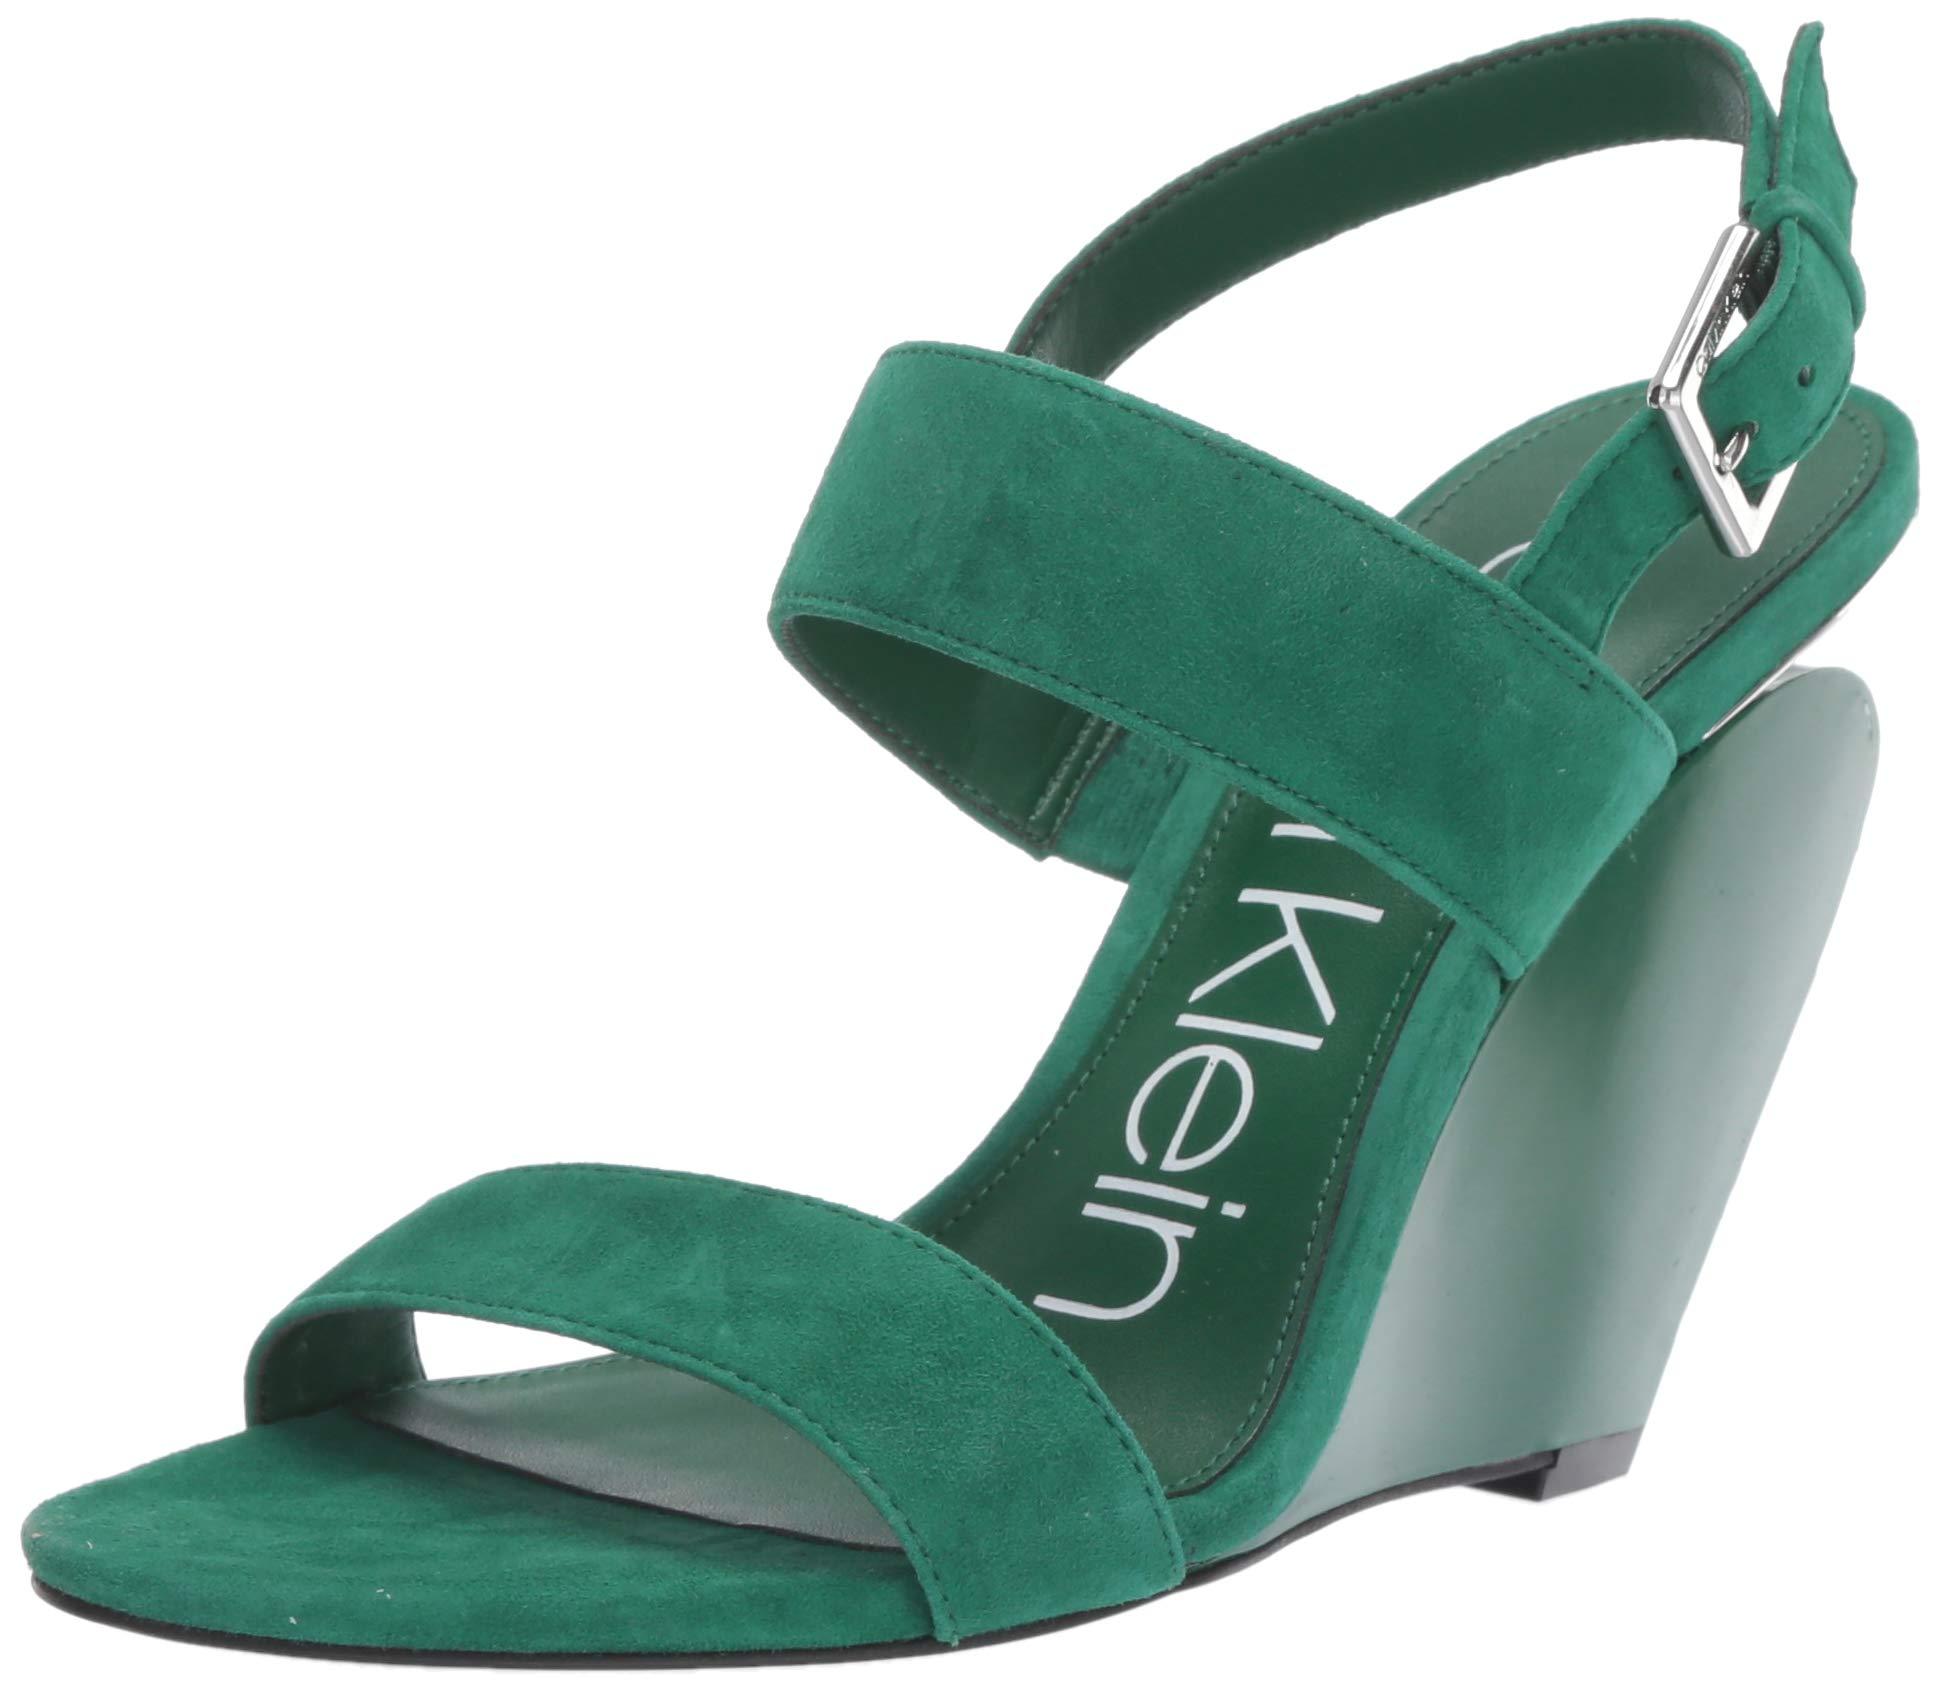 Calvin Klein Leslie Wedge Sandal in Emerald Green (Green) - Lyst